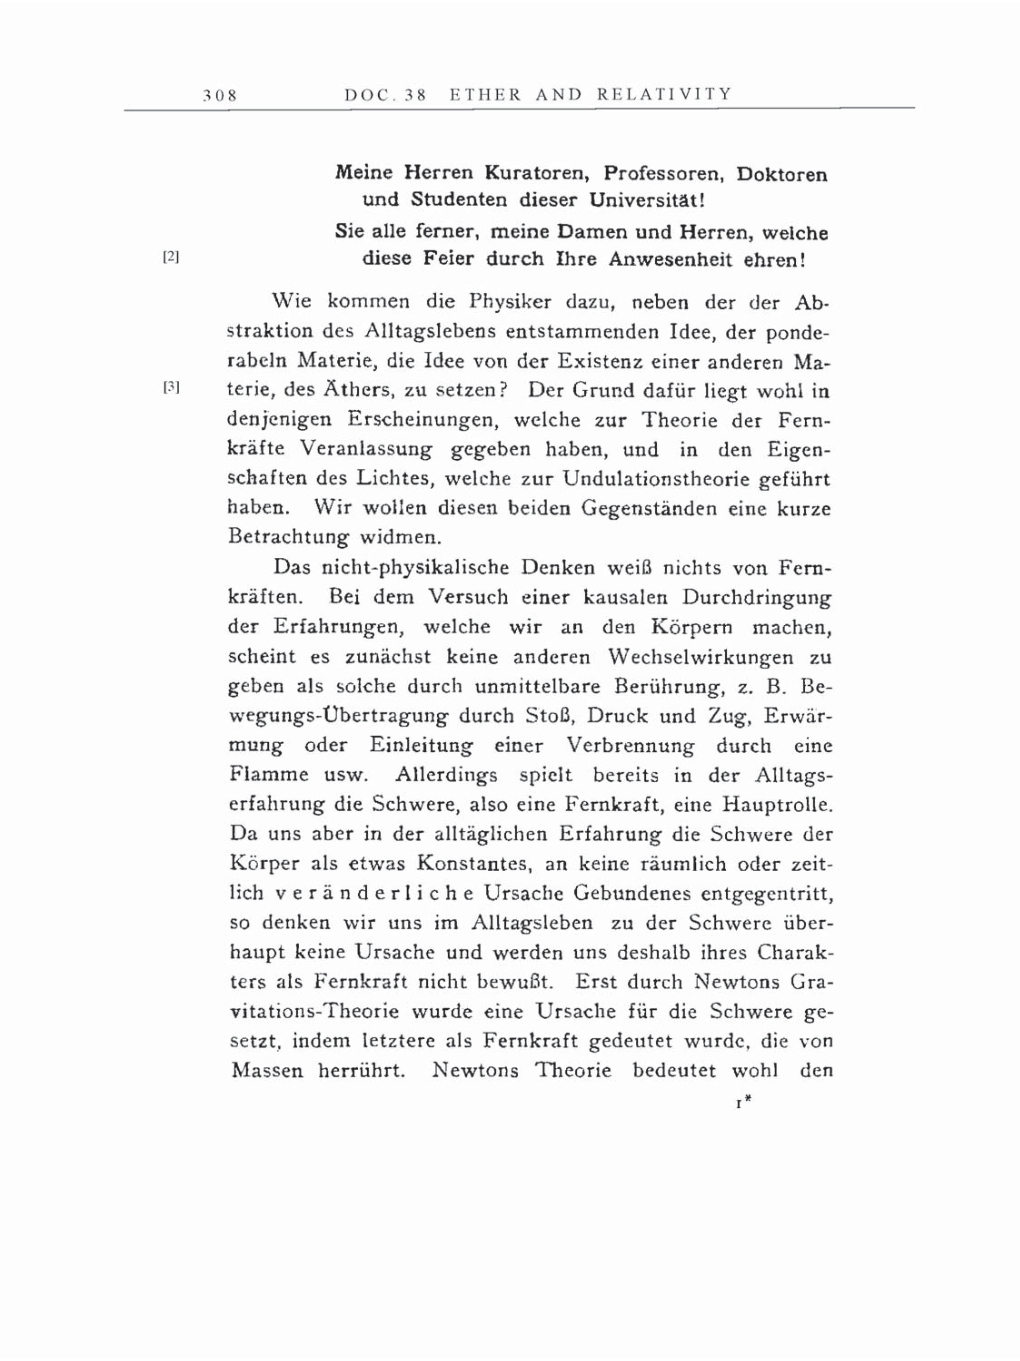 Volume 7: The Berlin Years: Writings, 1918-1921 page 308